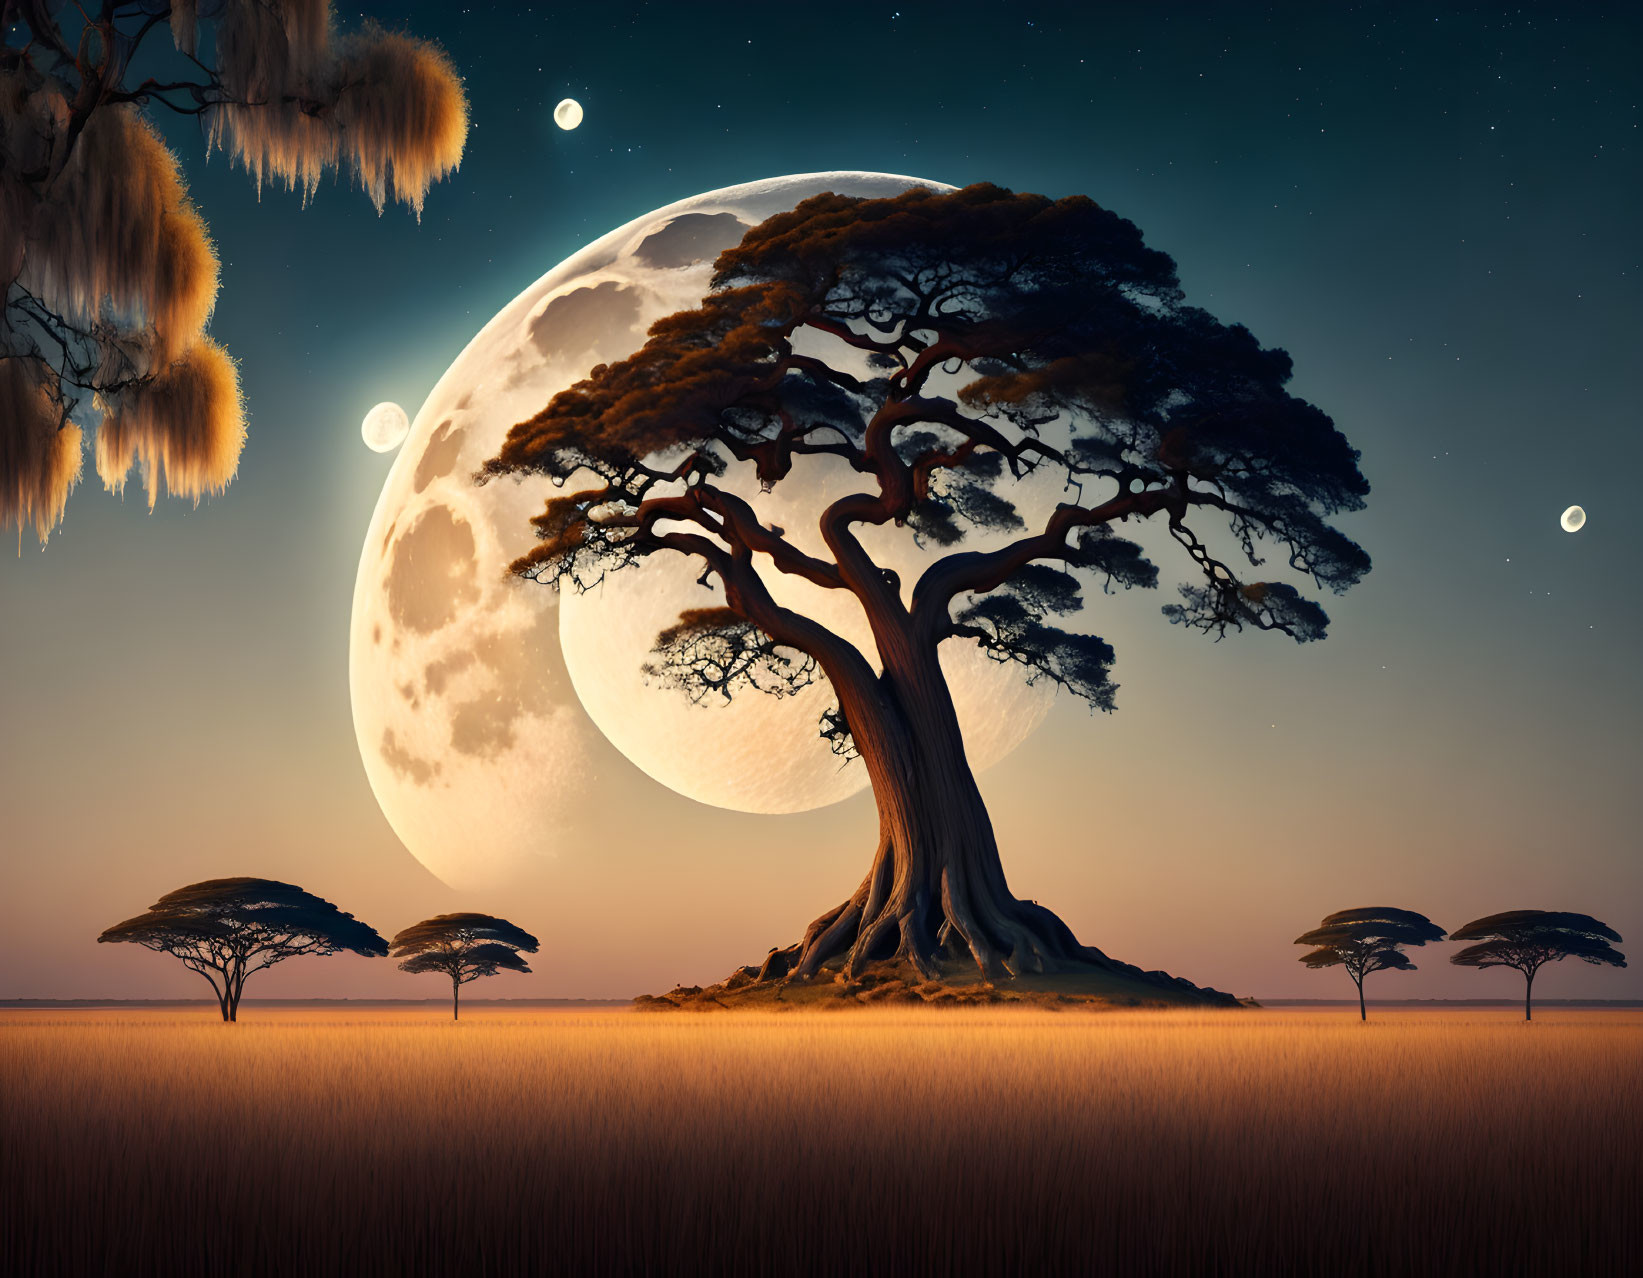 Moon rising over savannah